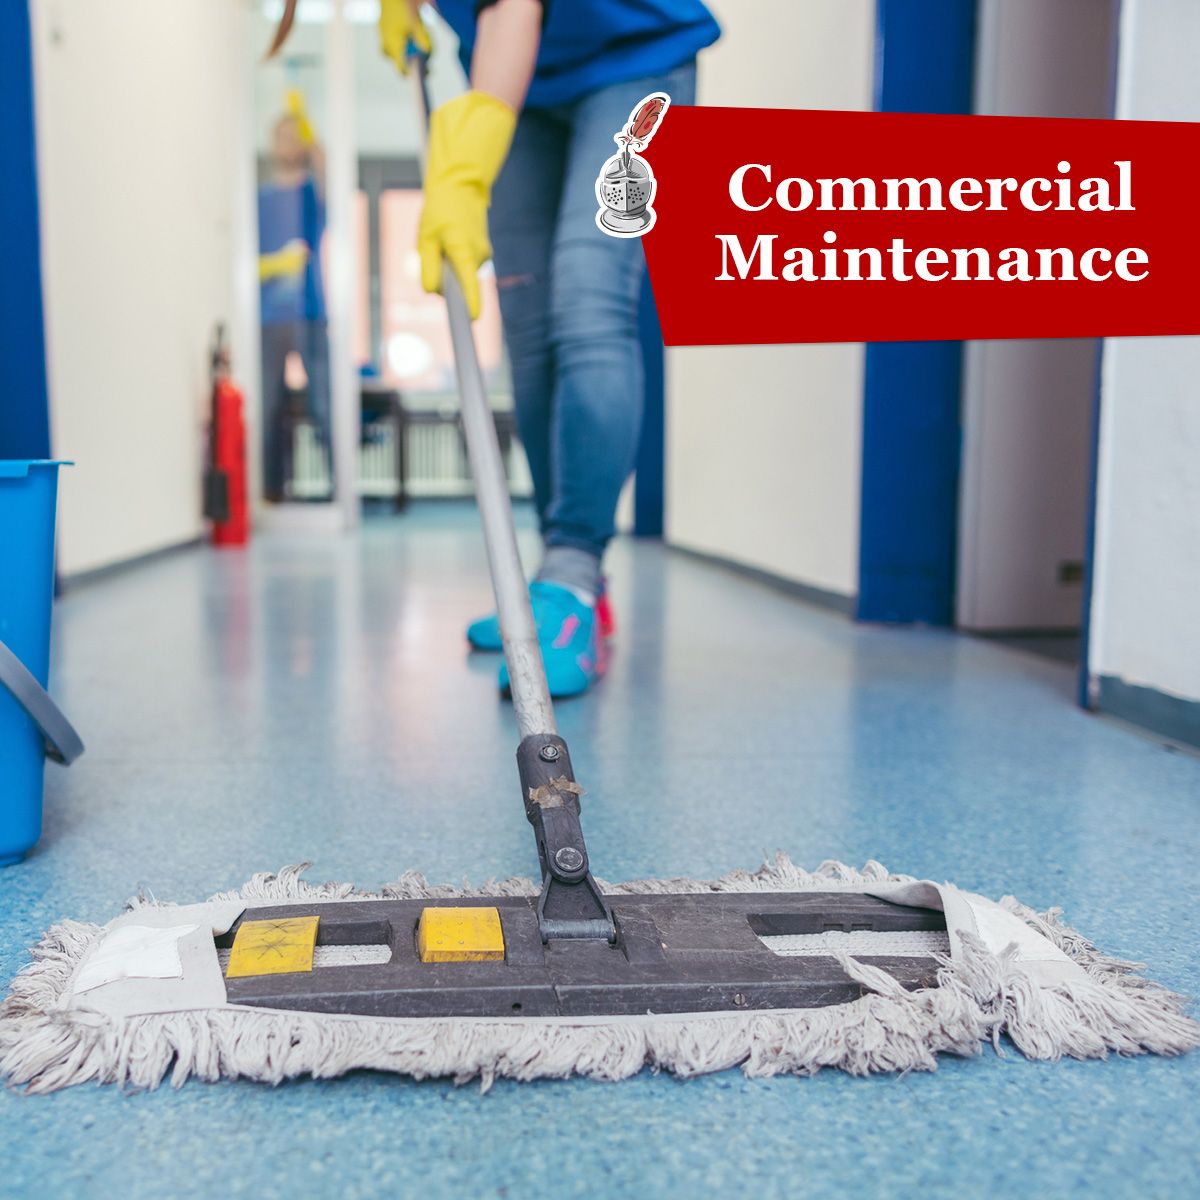 Commercial Maintenance